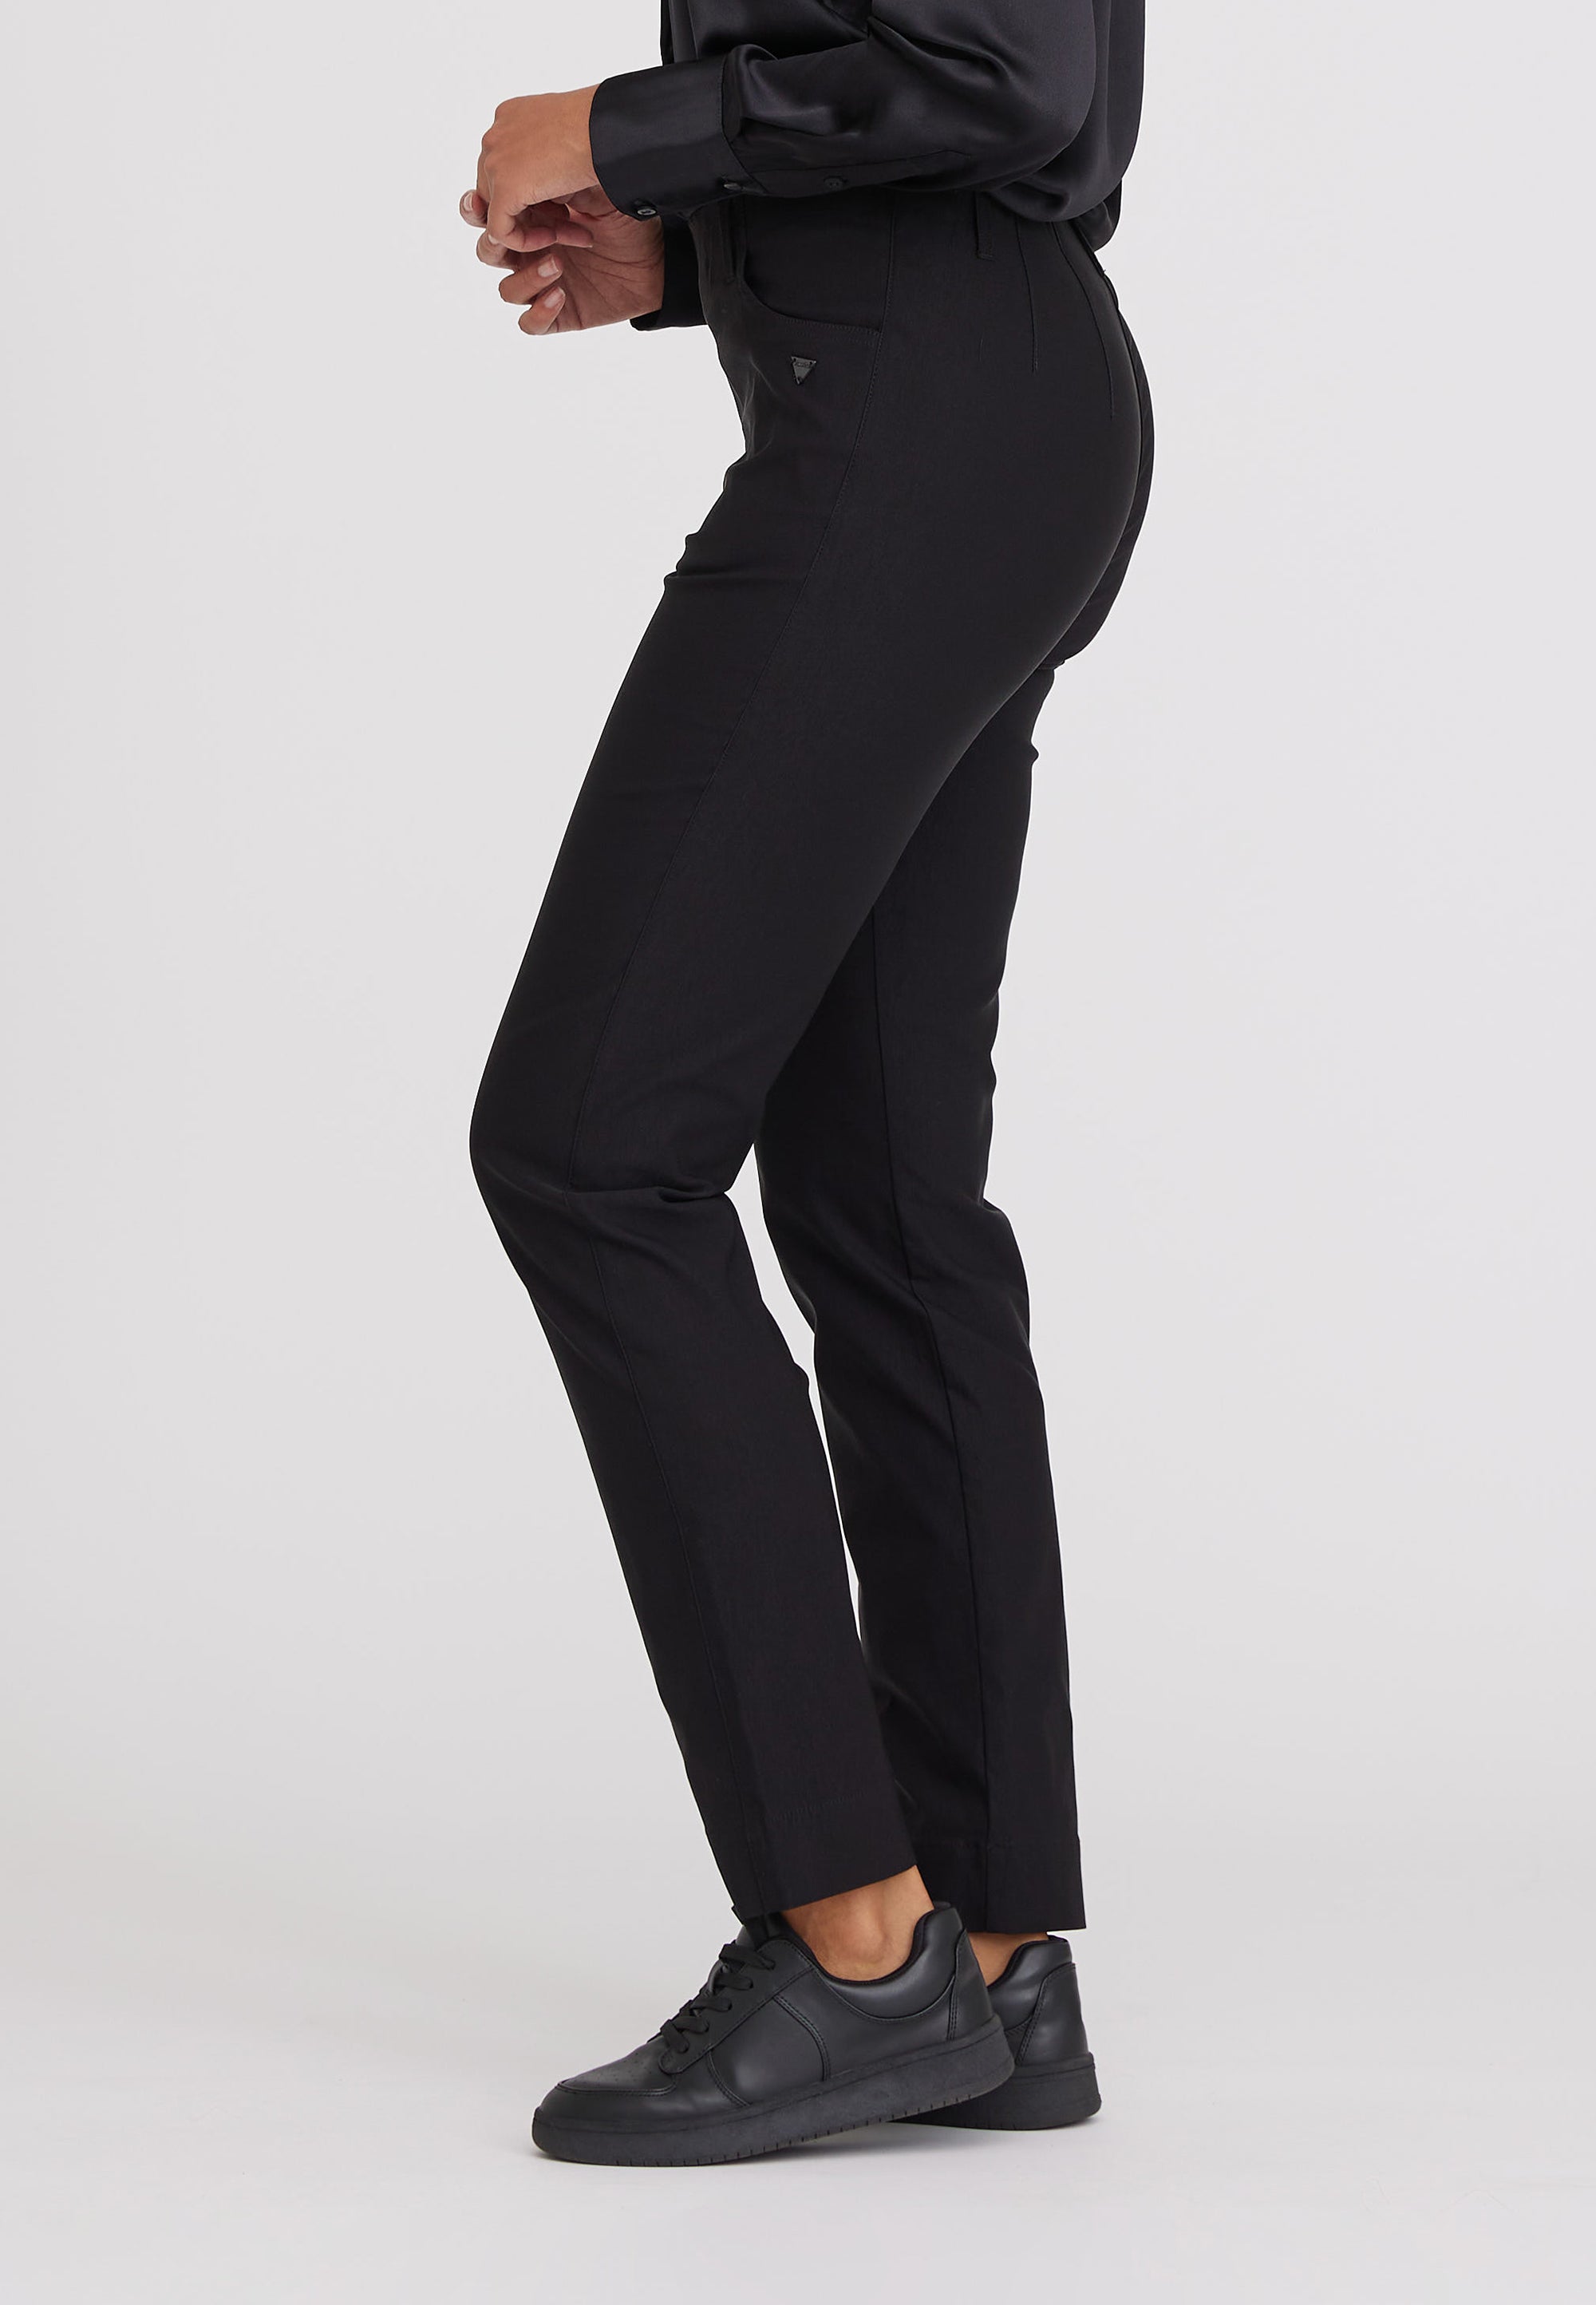 LAURIE  Kelly Regular - Medium Length Trousers REGULAR 99971 Black Brushed